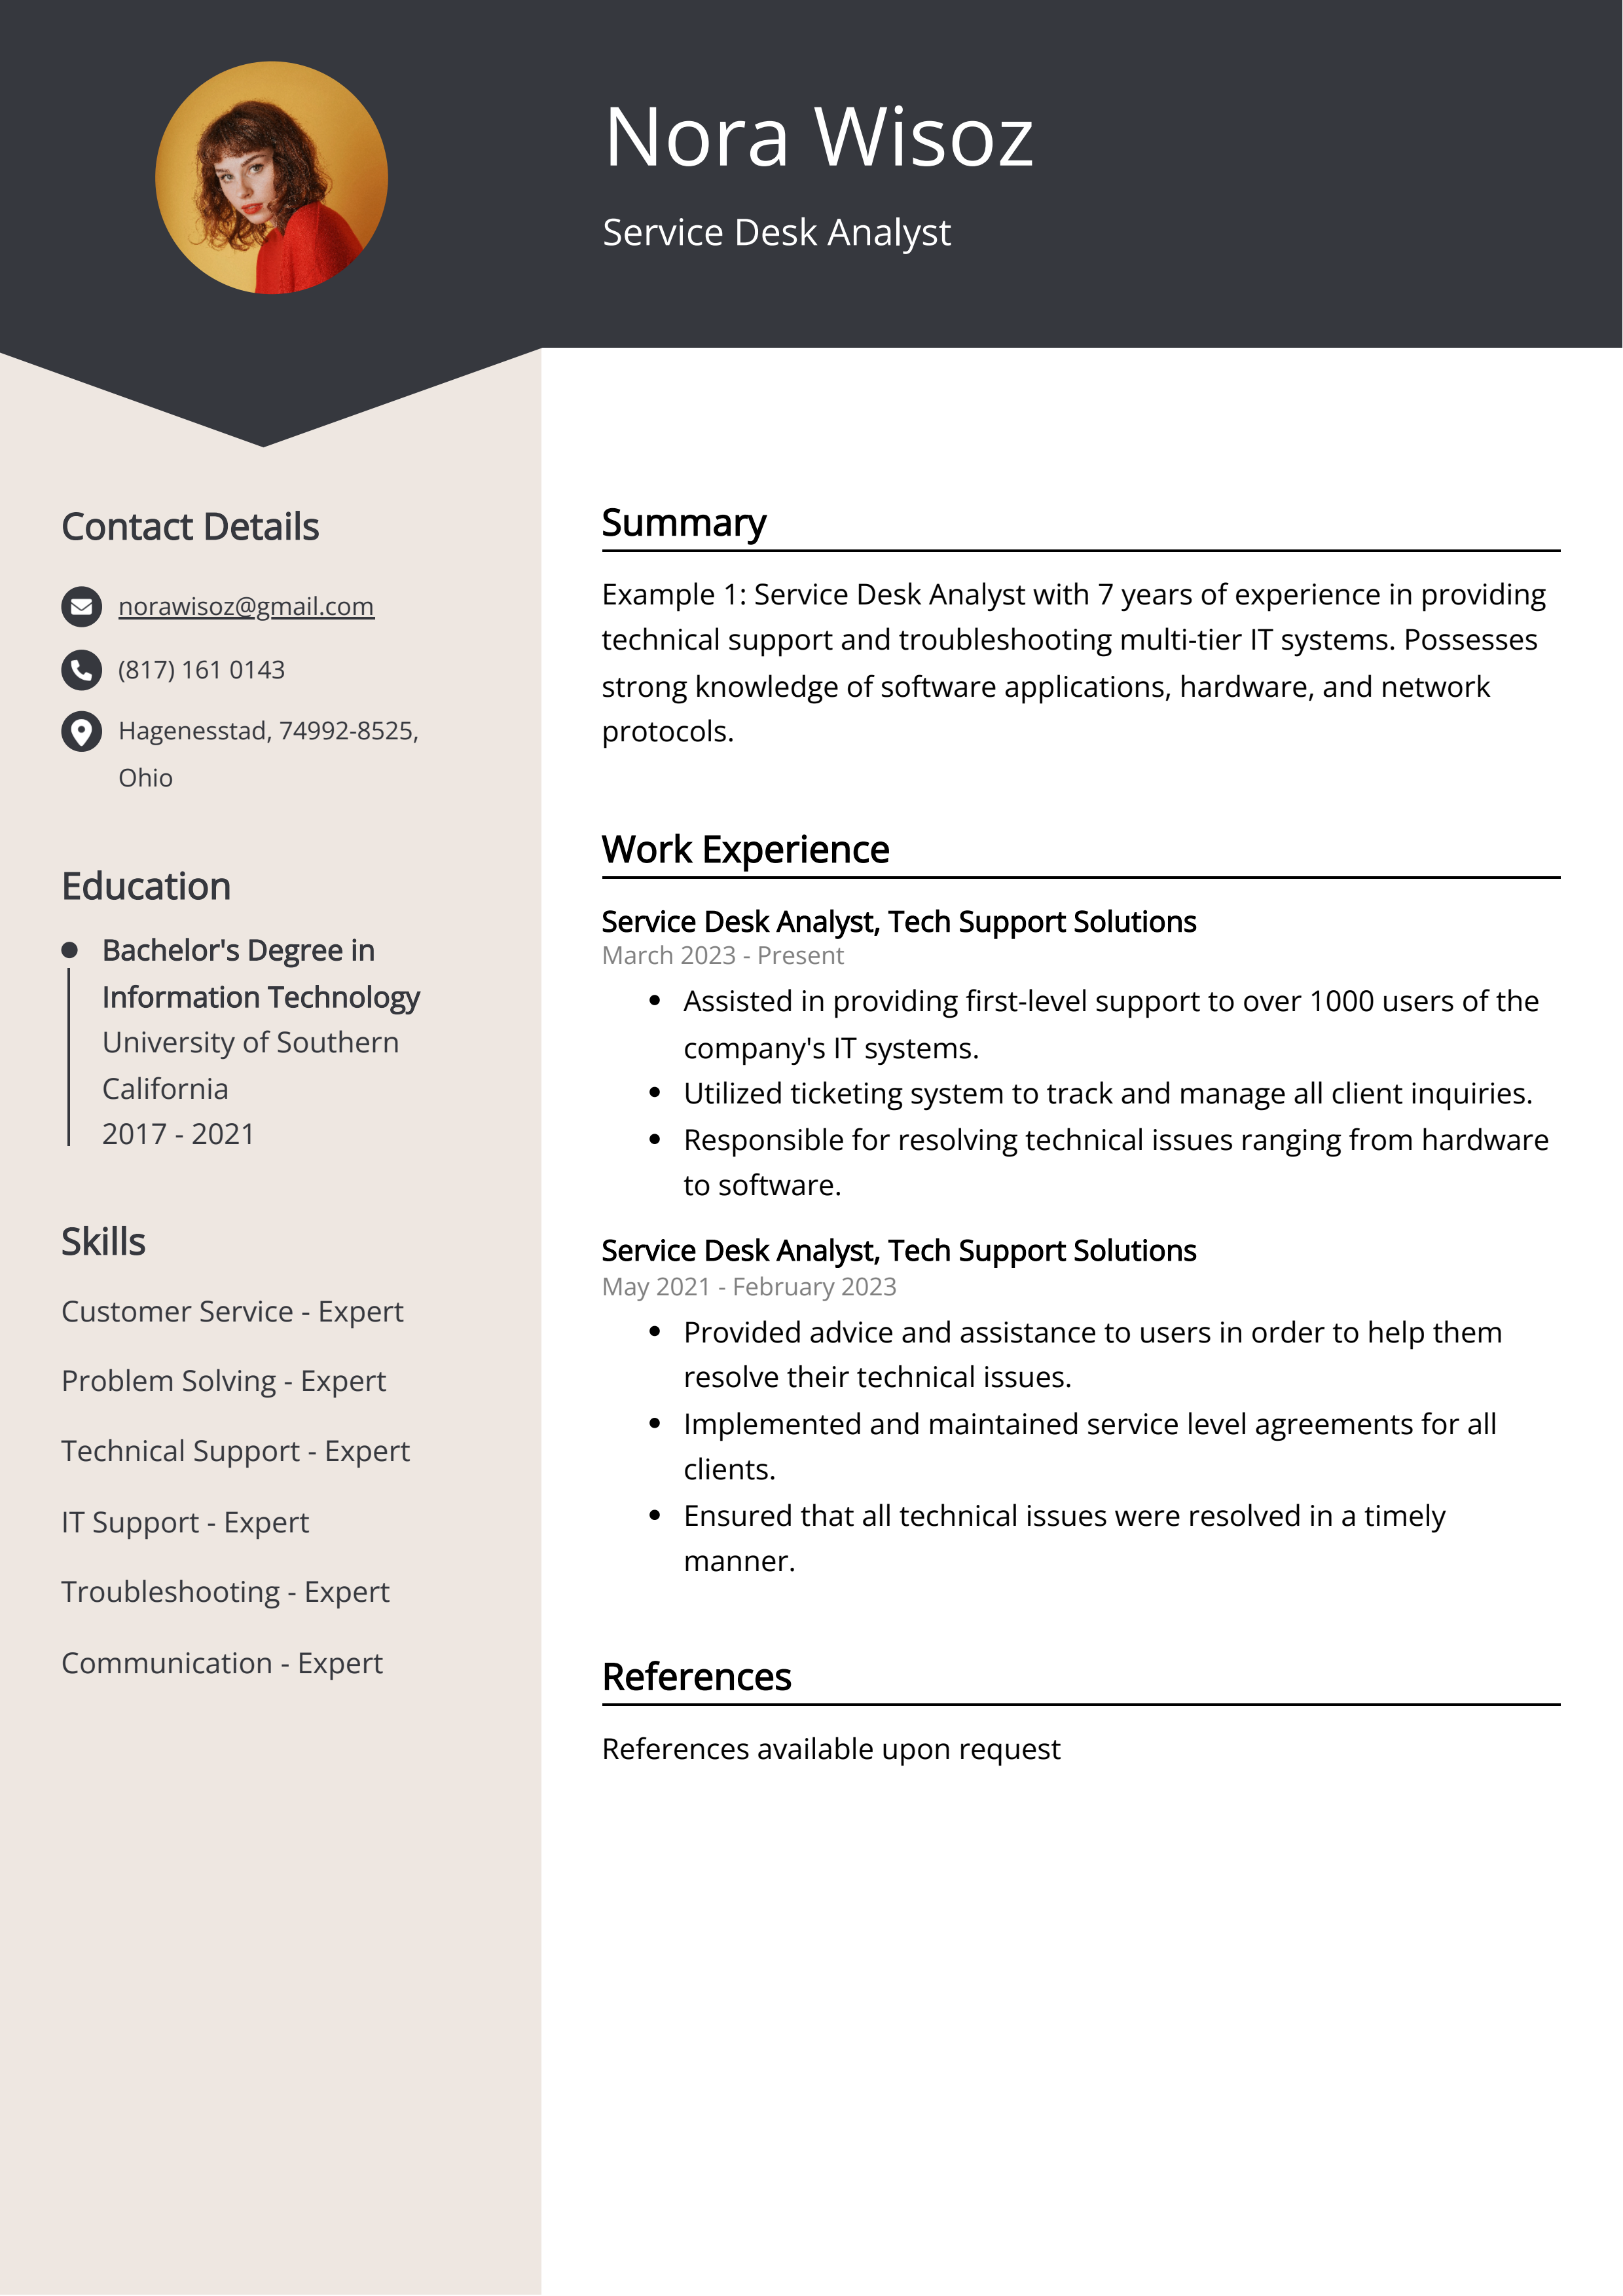 Service Desk Analyst CV Example